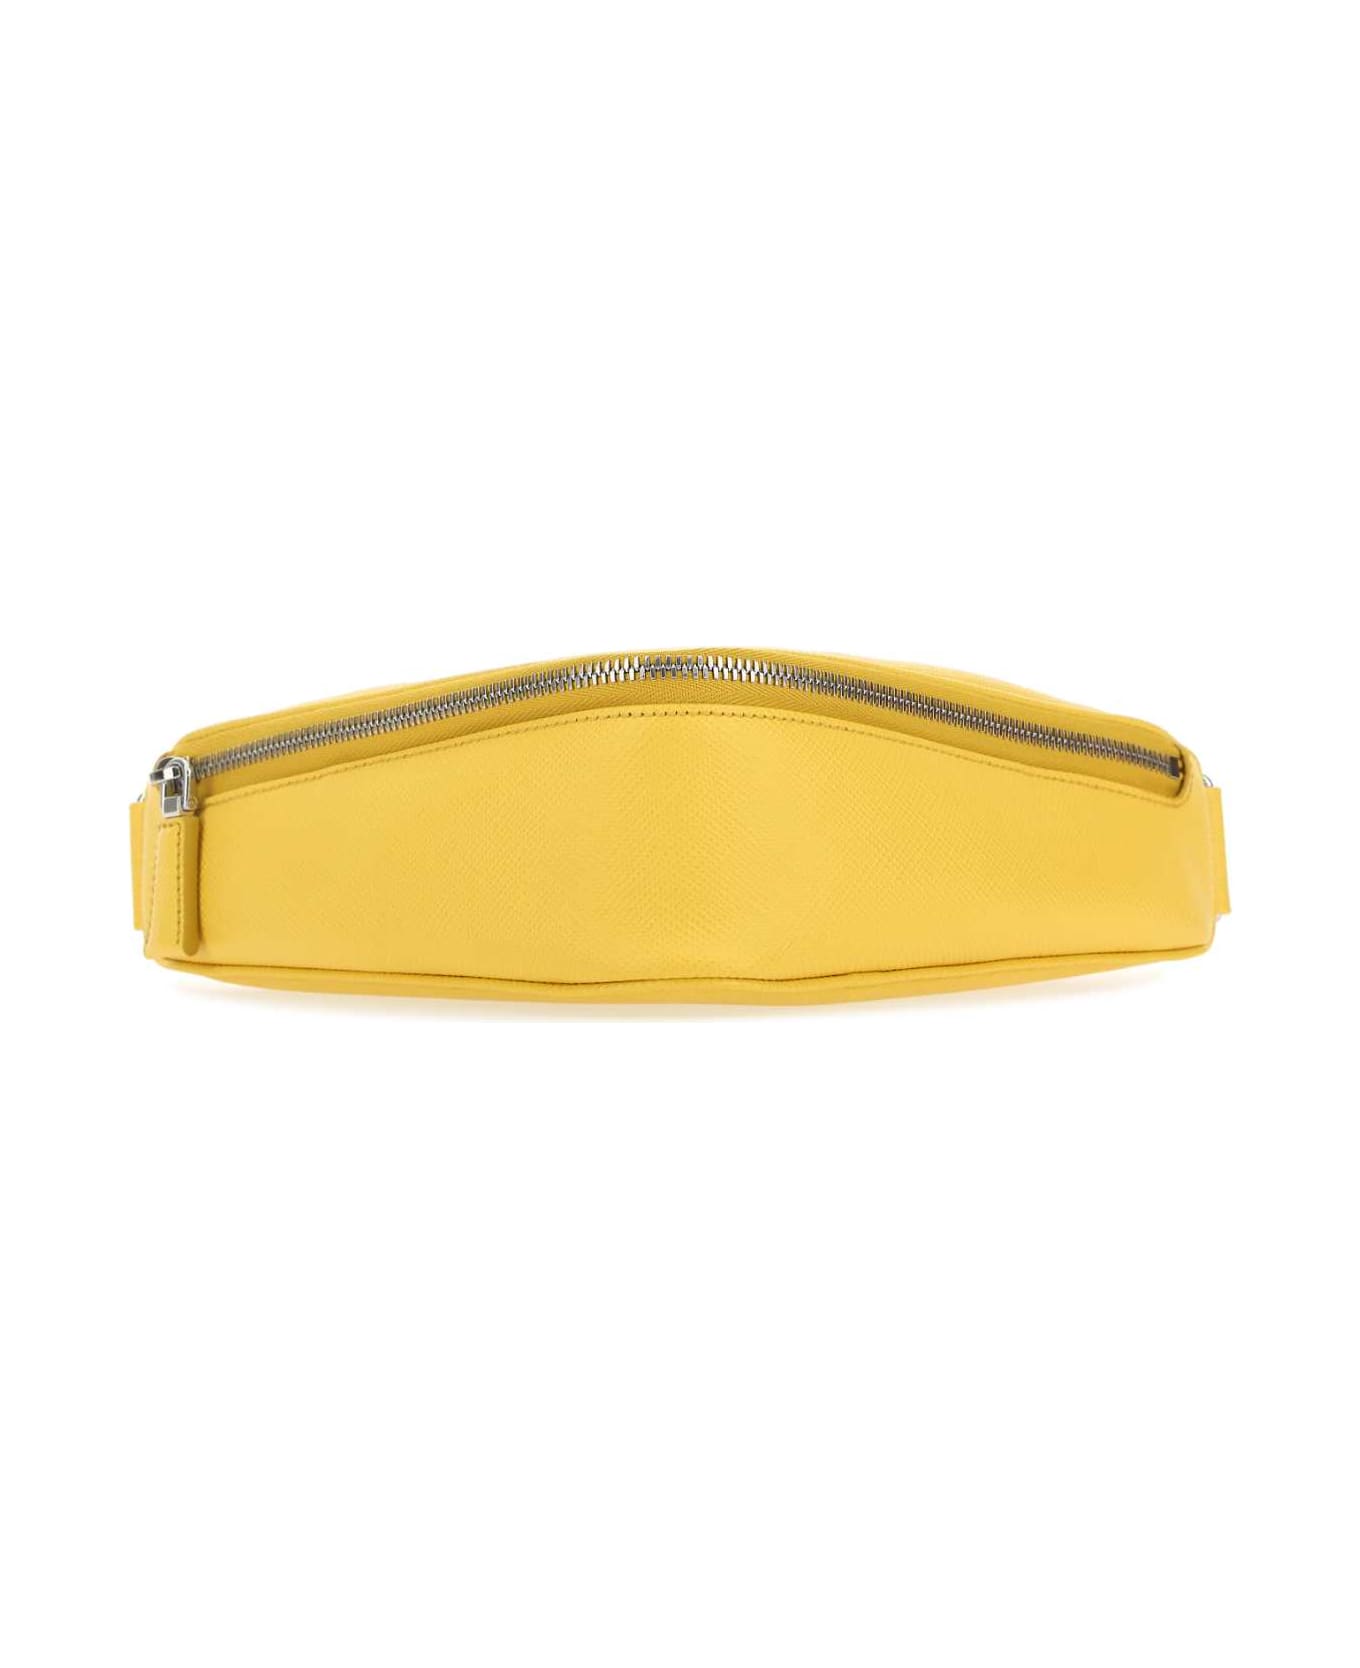 Prada Yellow Leather Belt Bag - F0377